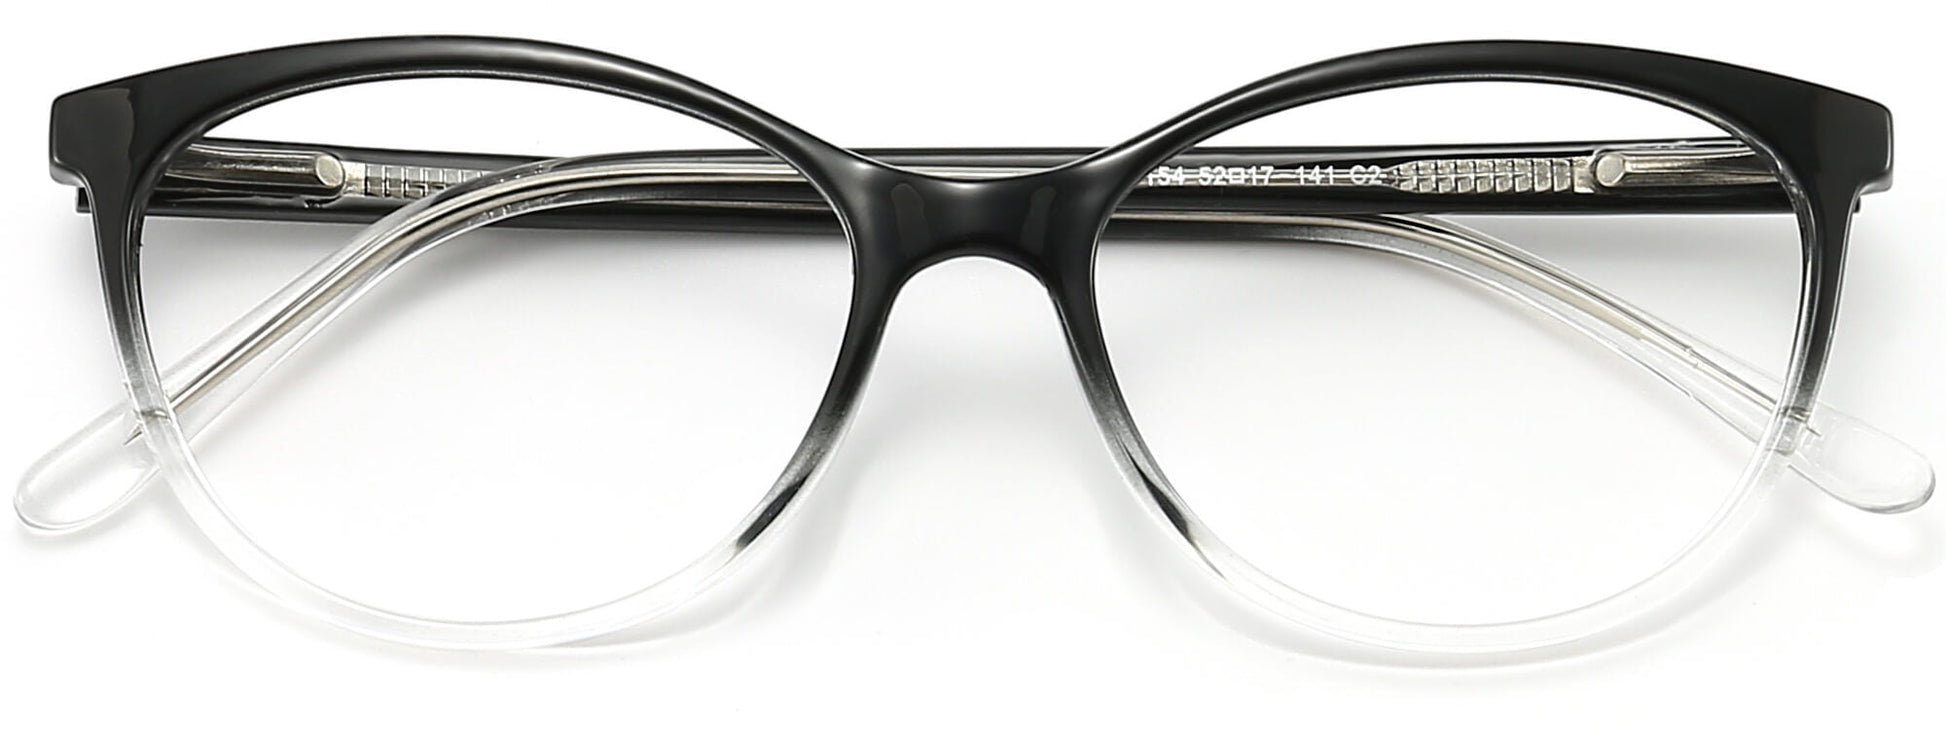 Transmit Cateye Black Eyeglasses from ANRRI, closed view